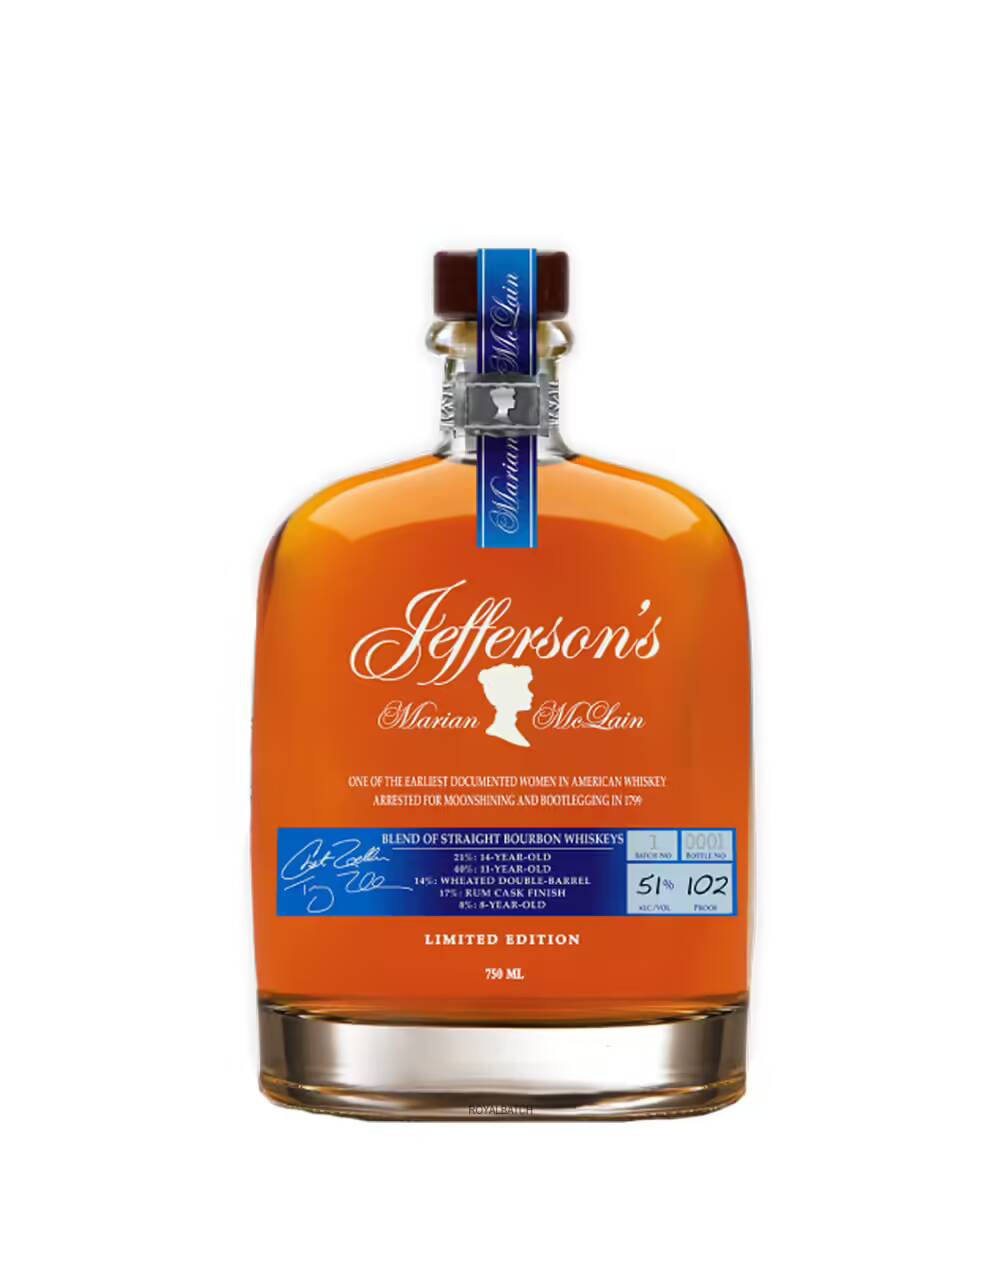 Jeffersons Marian Mc Lain Limited Edition Bourbon Whiskey